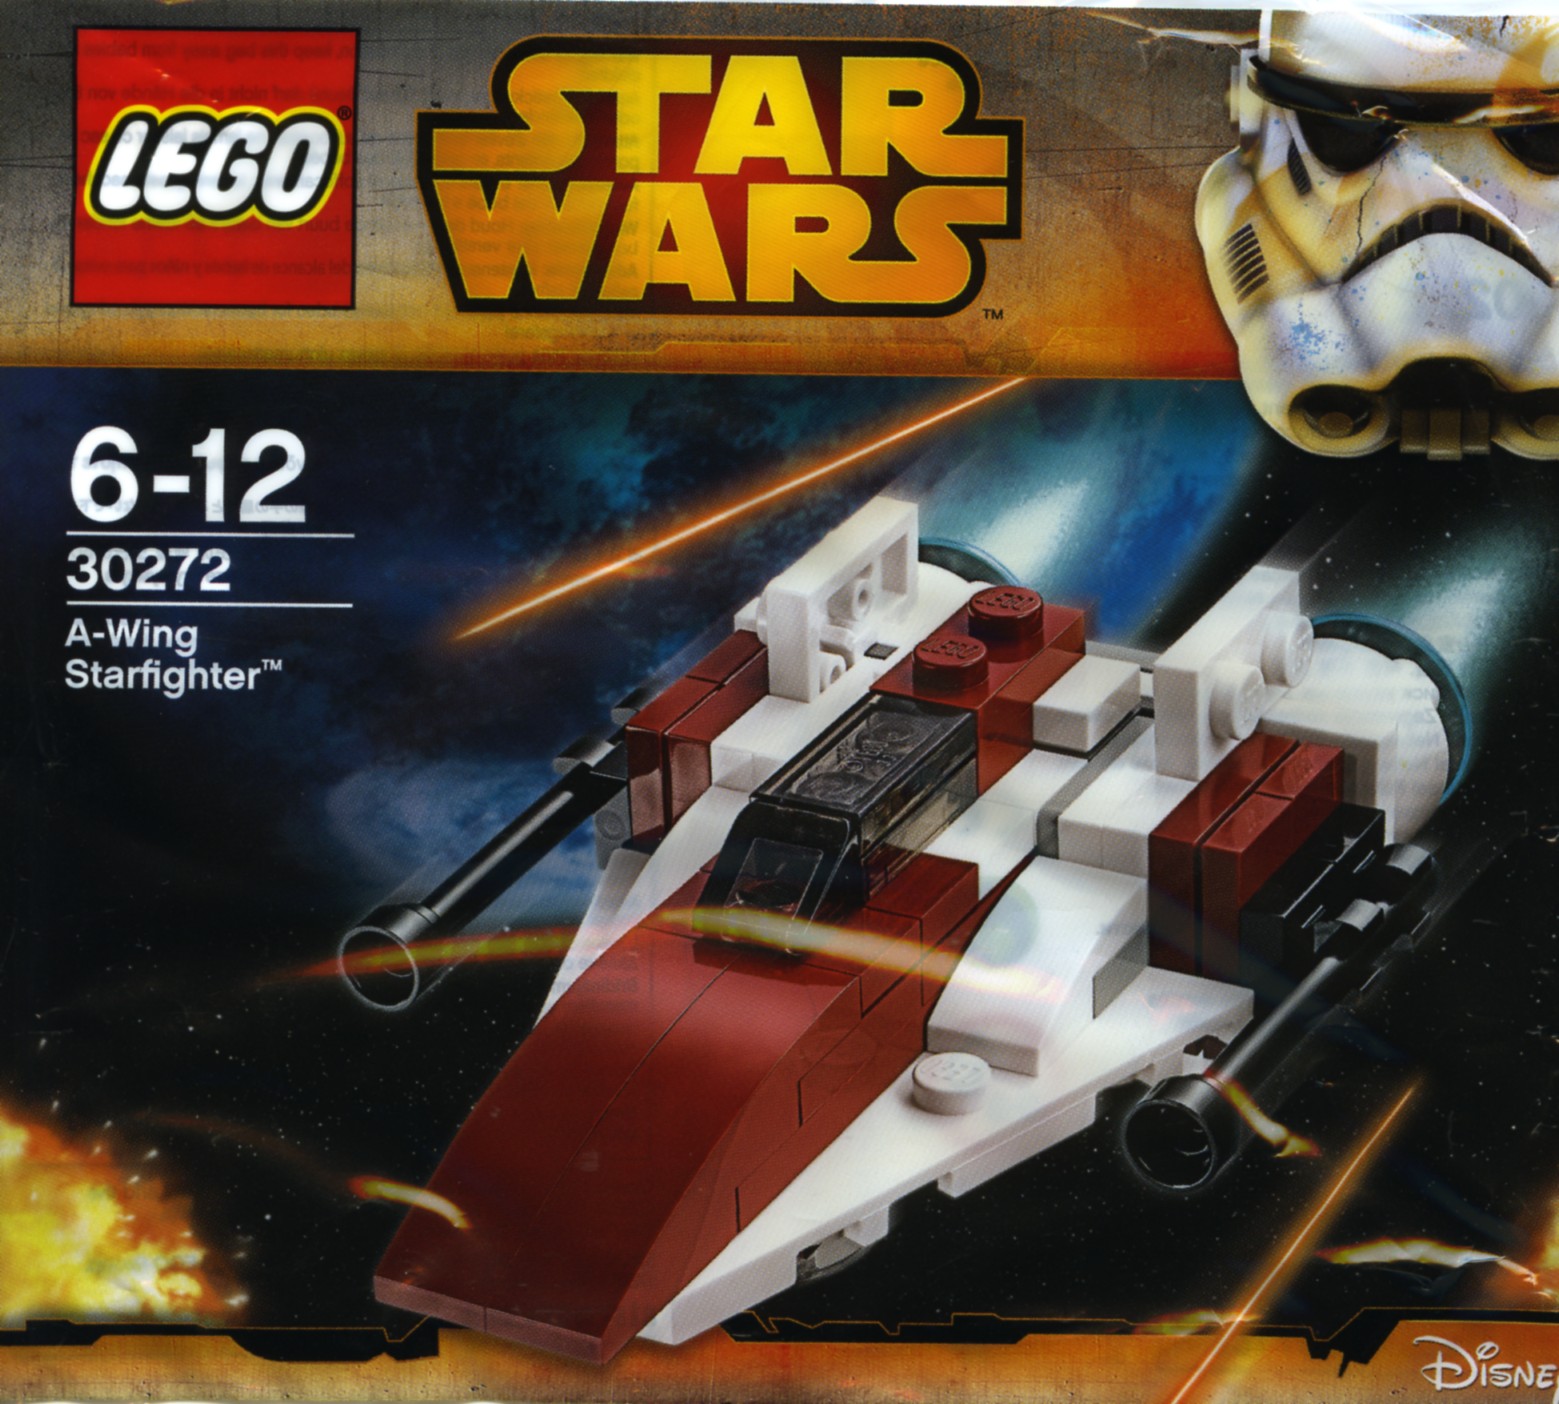 thuis Hinder preambule Star Wars | 2015 | Brickset: LEGO set guide and database